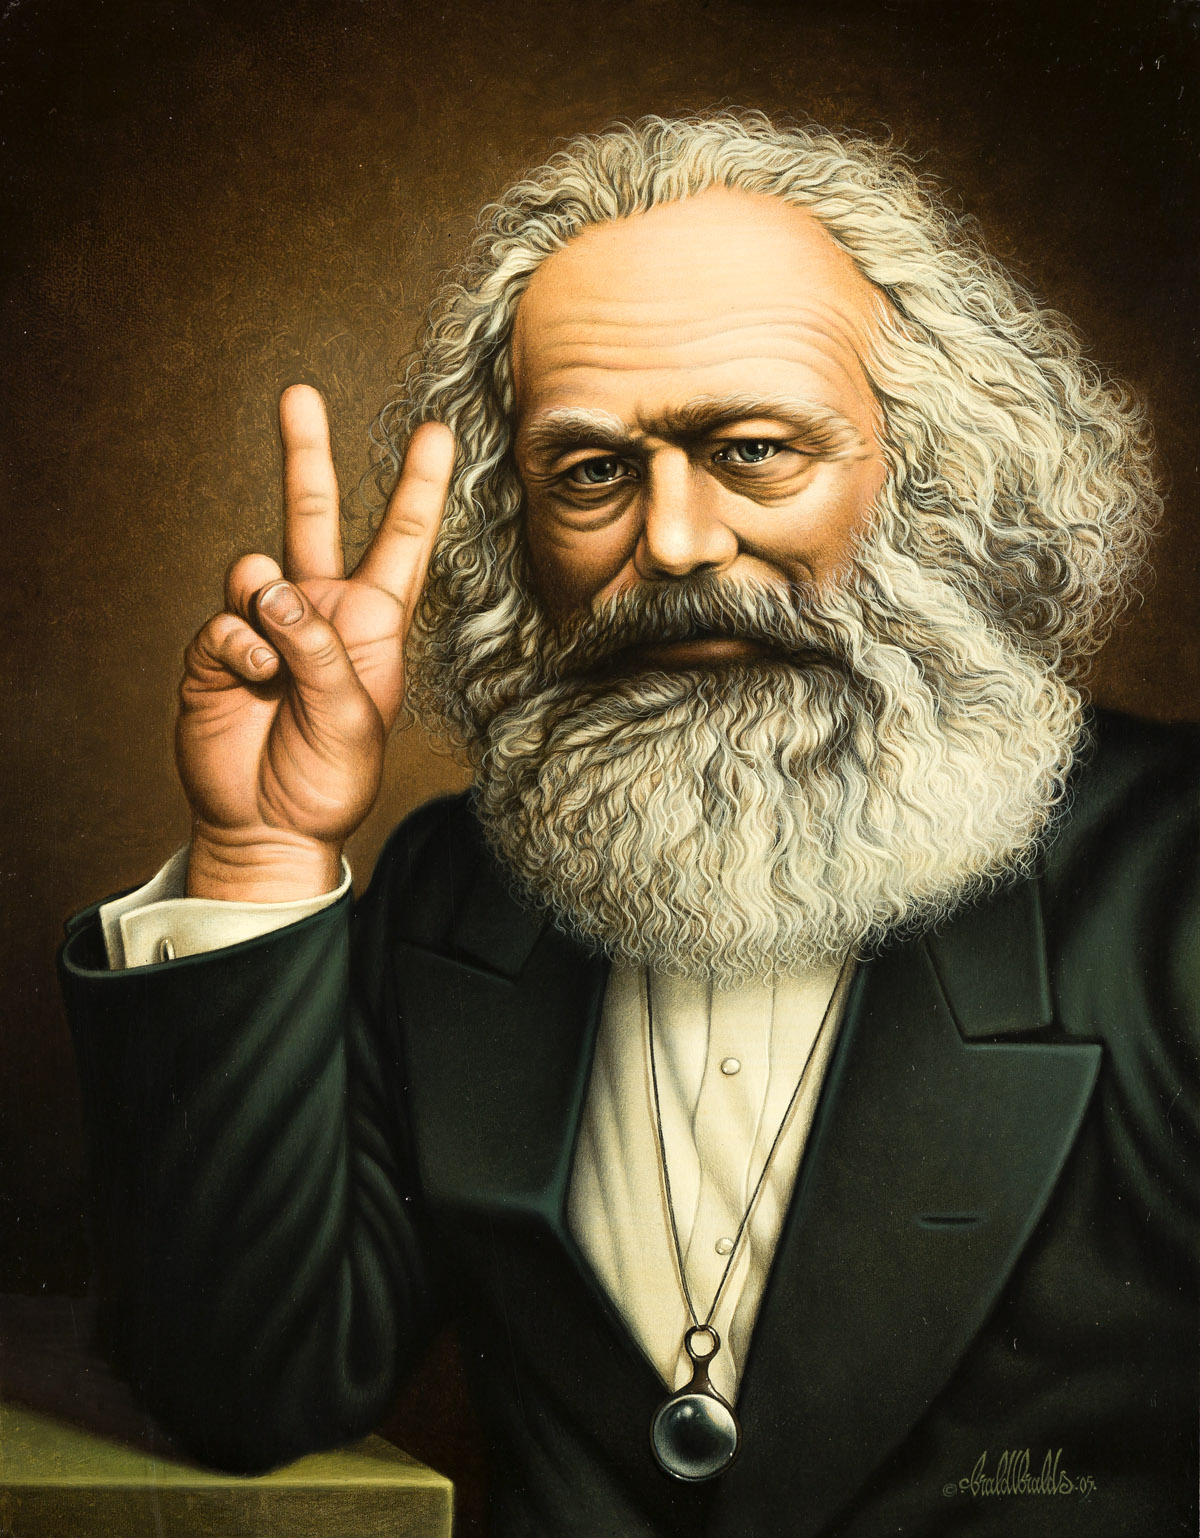 Karl Marx's work endures 200 years after his birth